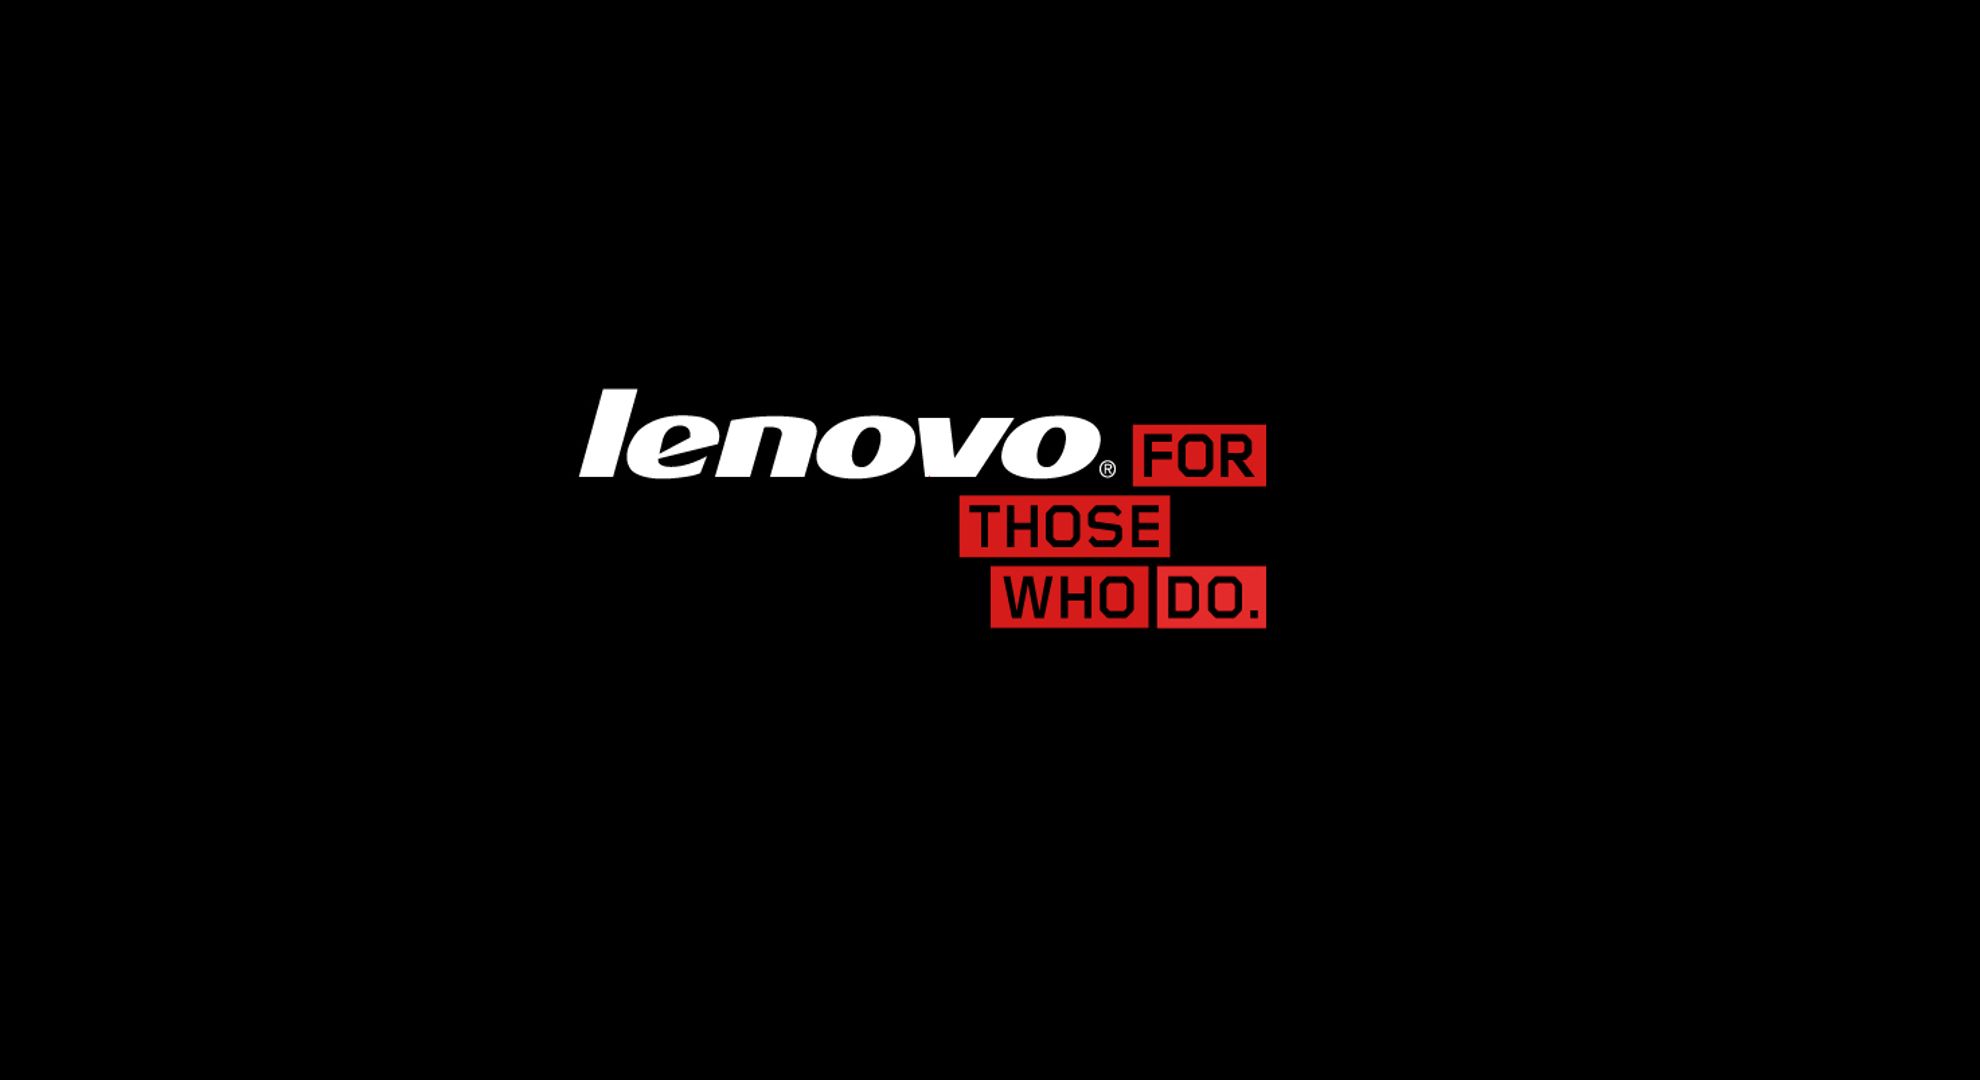 Обои на рабочий стол Lenovo